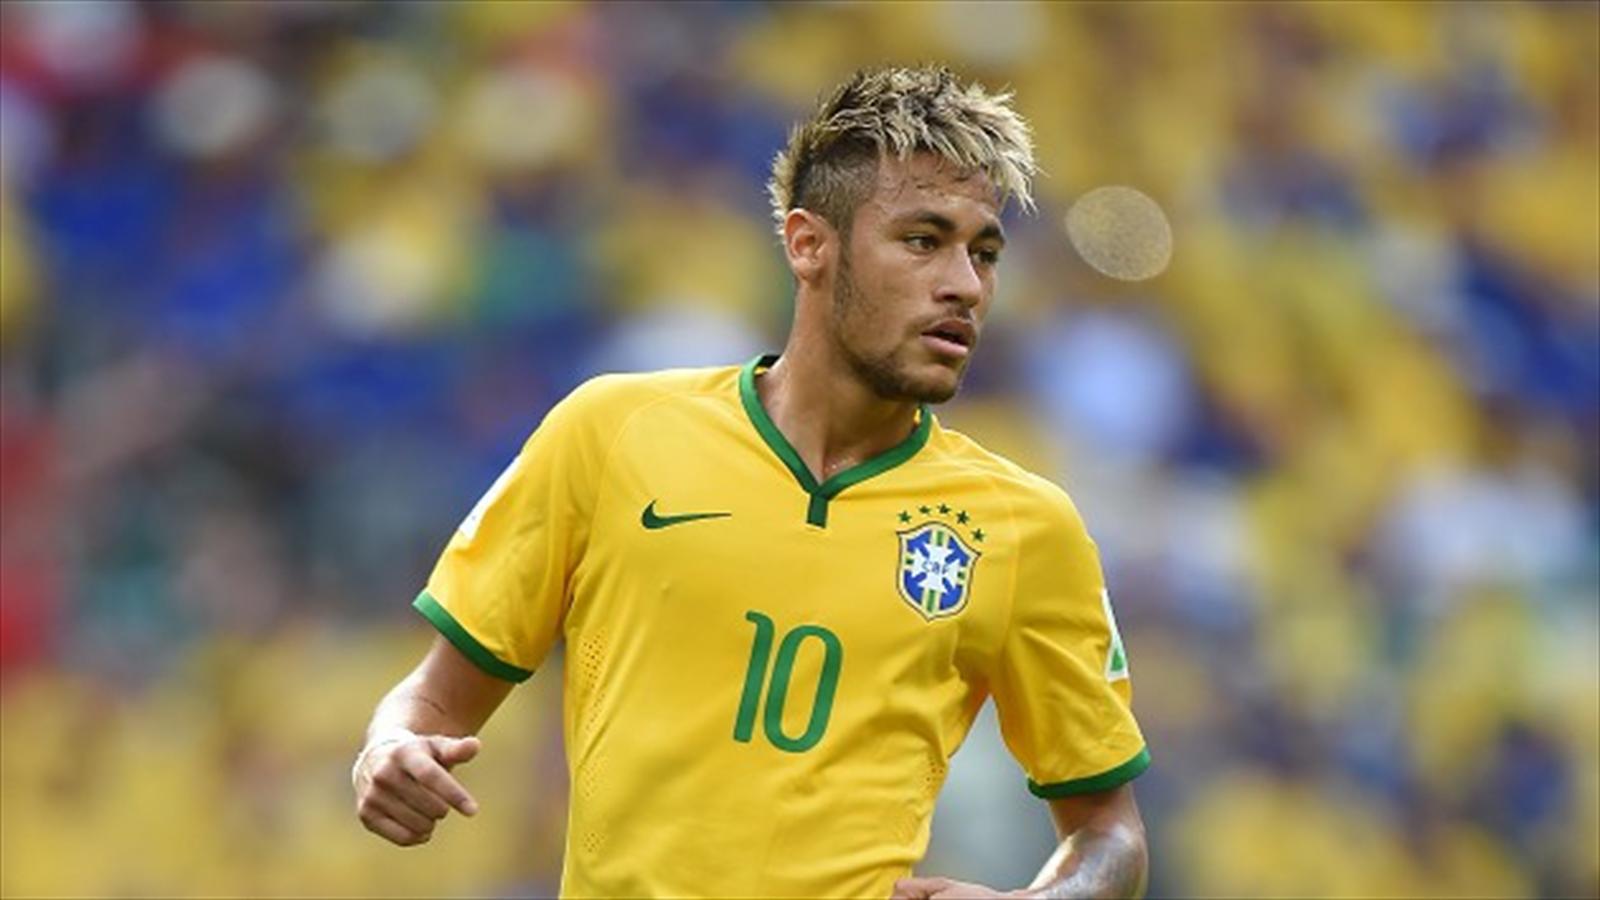 Neymar Brazil HD Wallpaper 5. Neymar Brazil HD Wallpaper